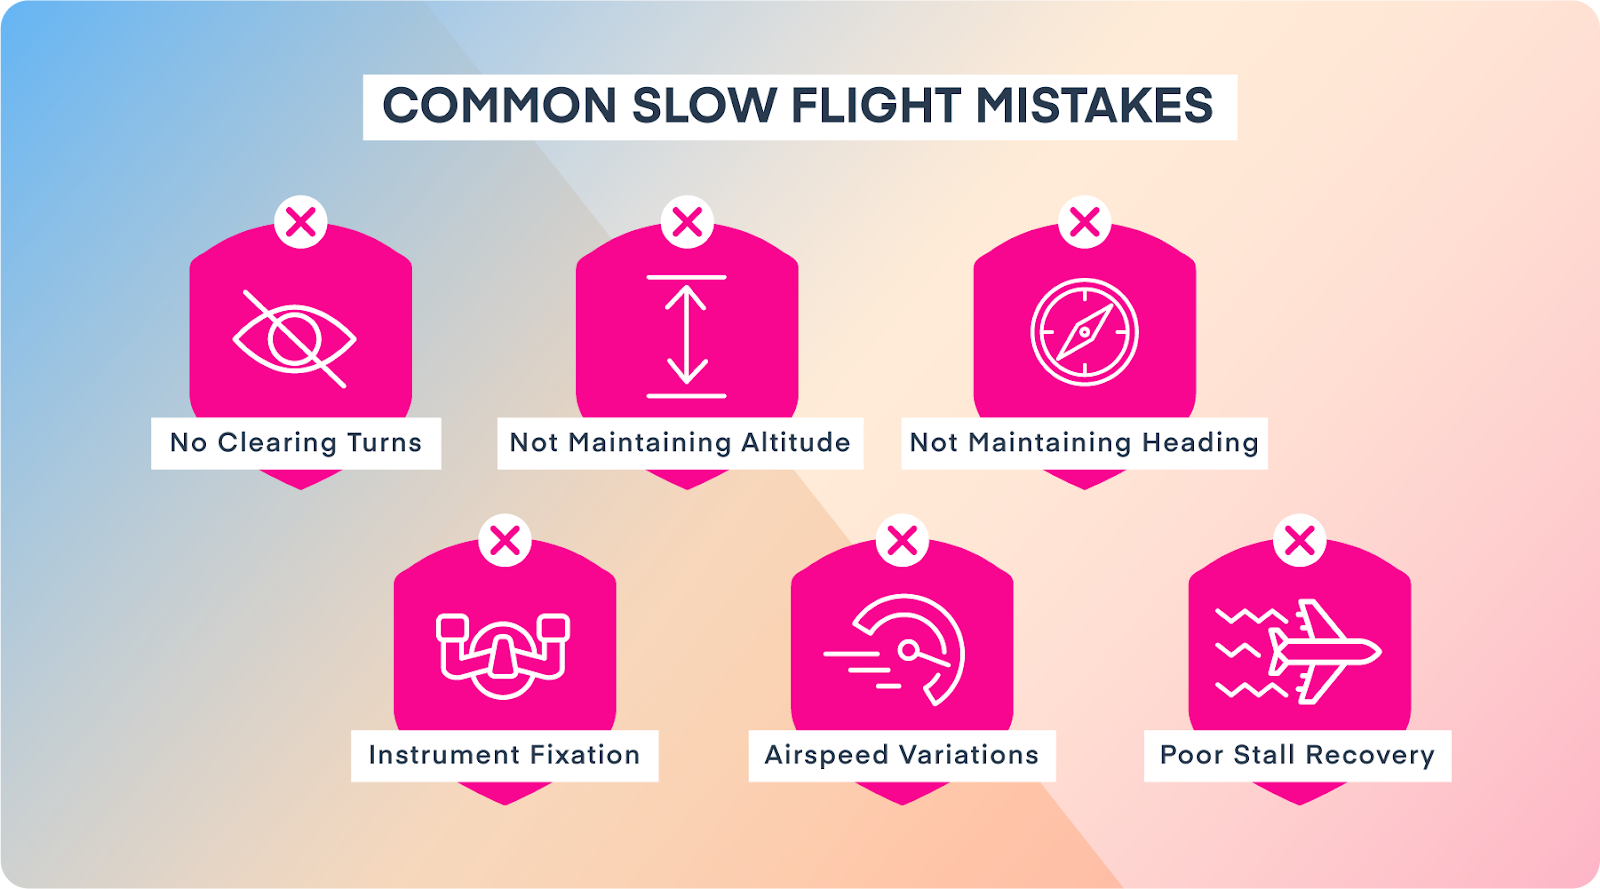 Common slow flight mistakes infographic.